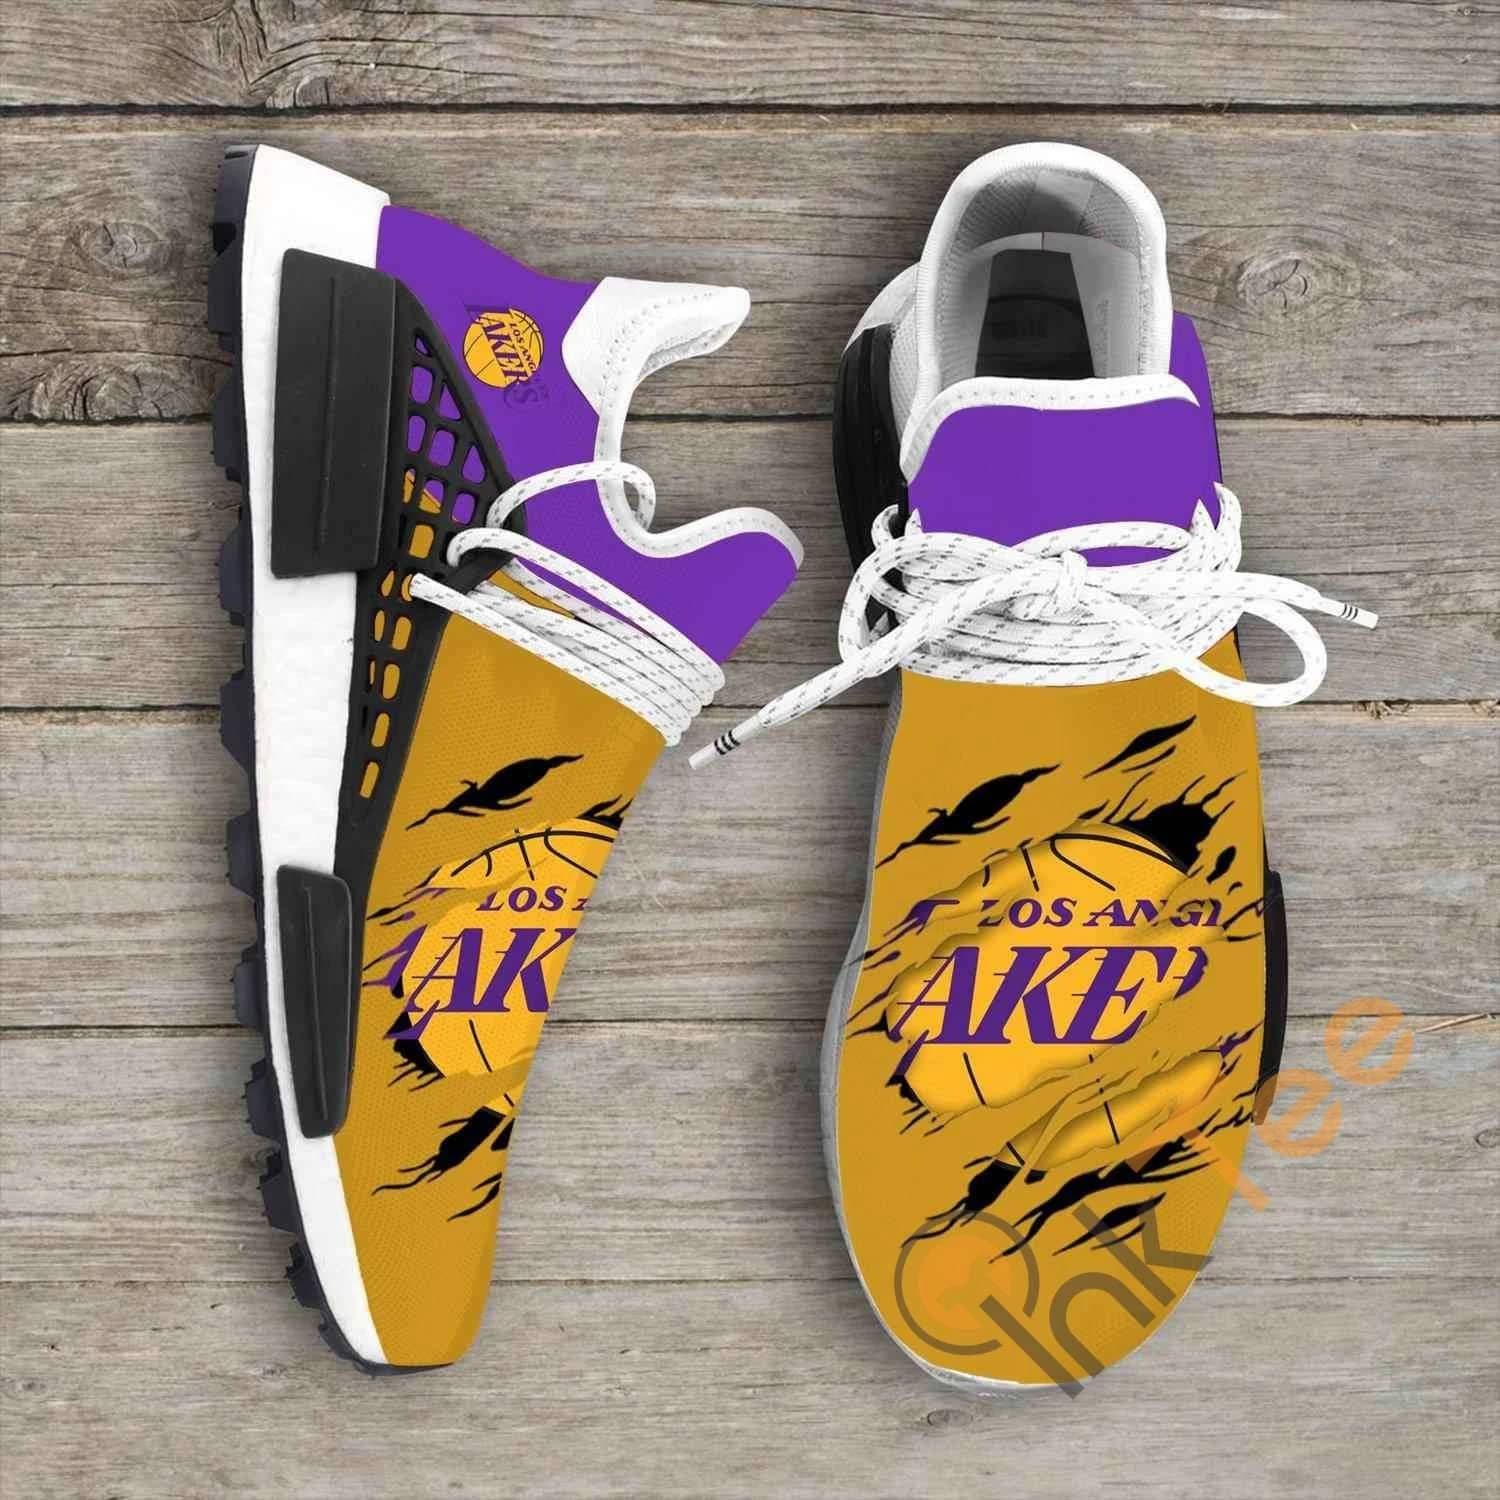 Los Angeles Lakers Nba Ha02 Nmd Human Shoes